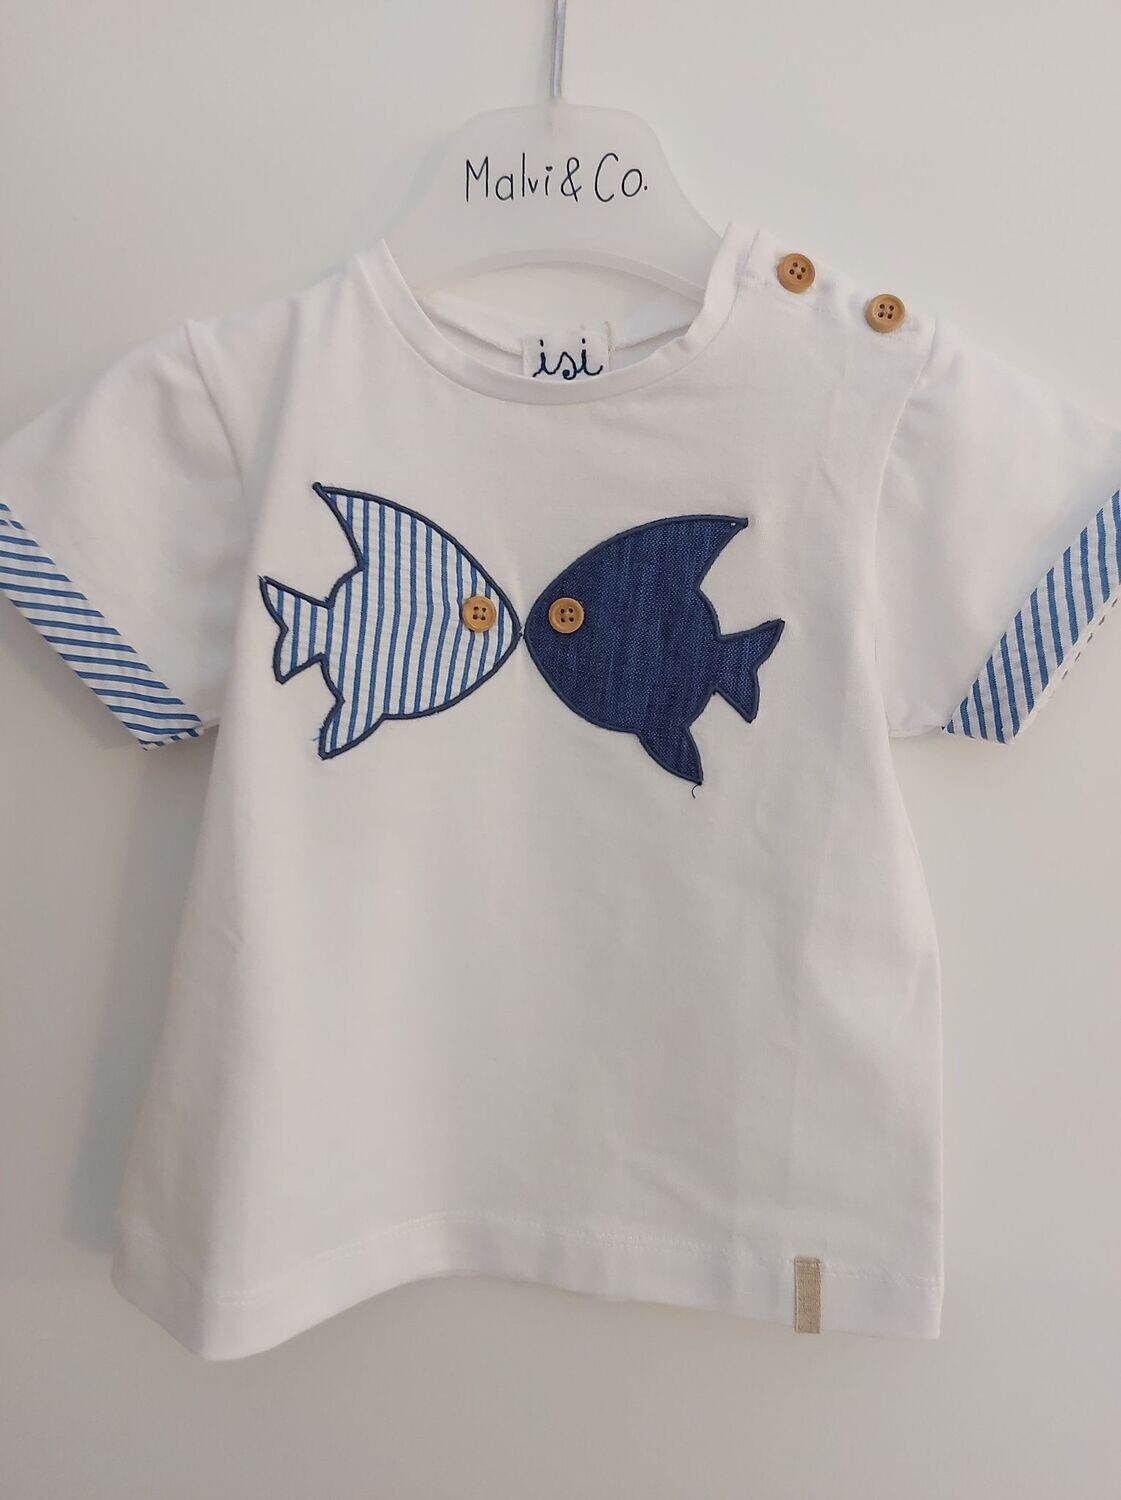 Malvi & Co Jersey Boy T-Shirt with fish patch